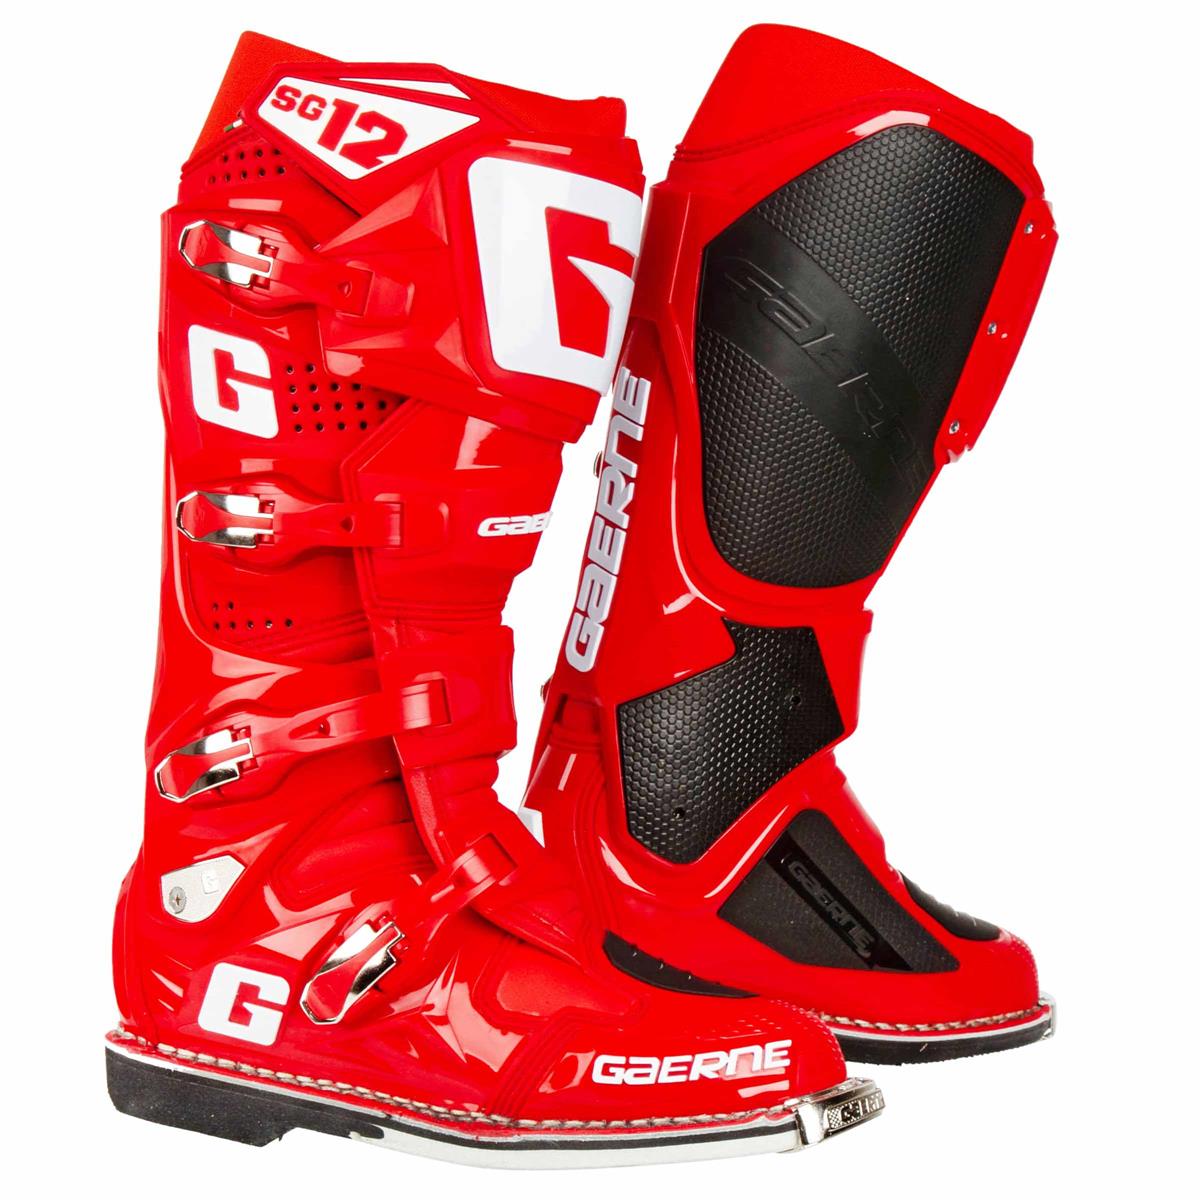 Weg huis Begrip heet Gaerne MX Boots SG 12 Solid Red | Maciag Offroad